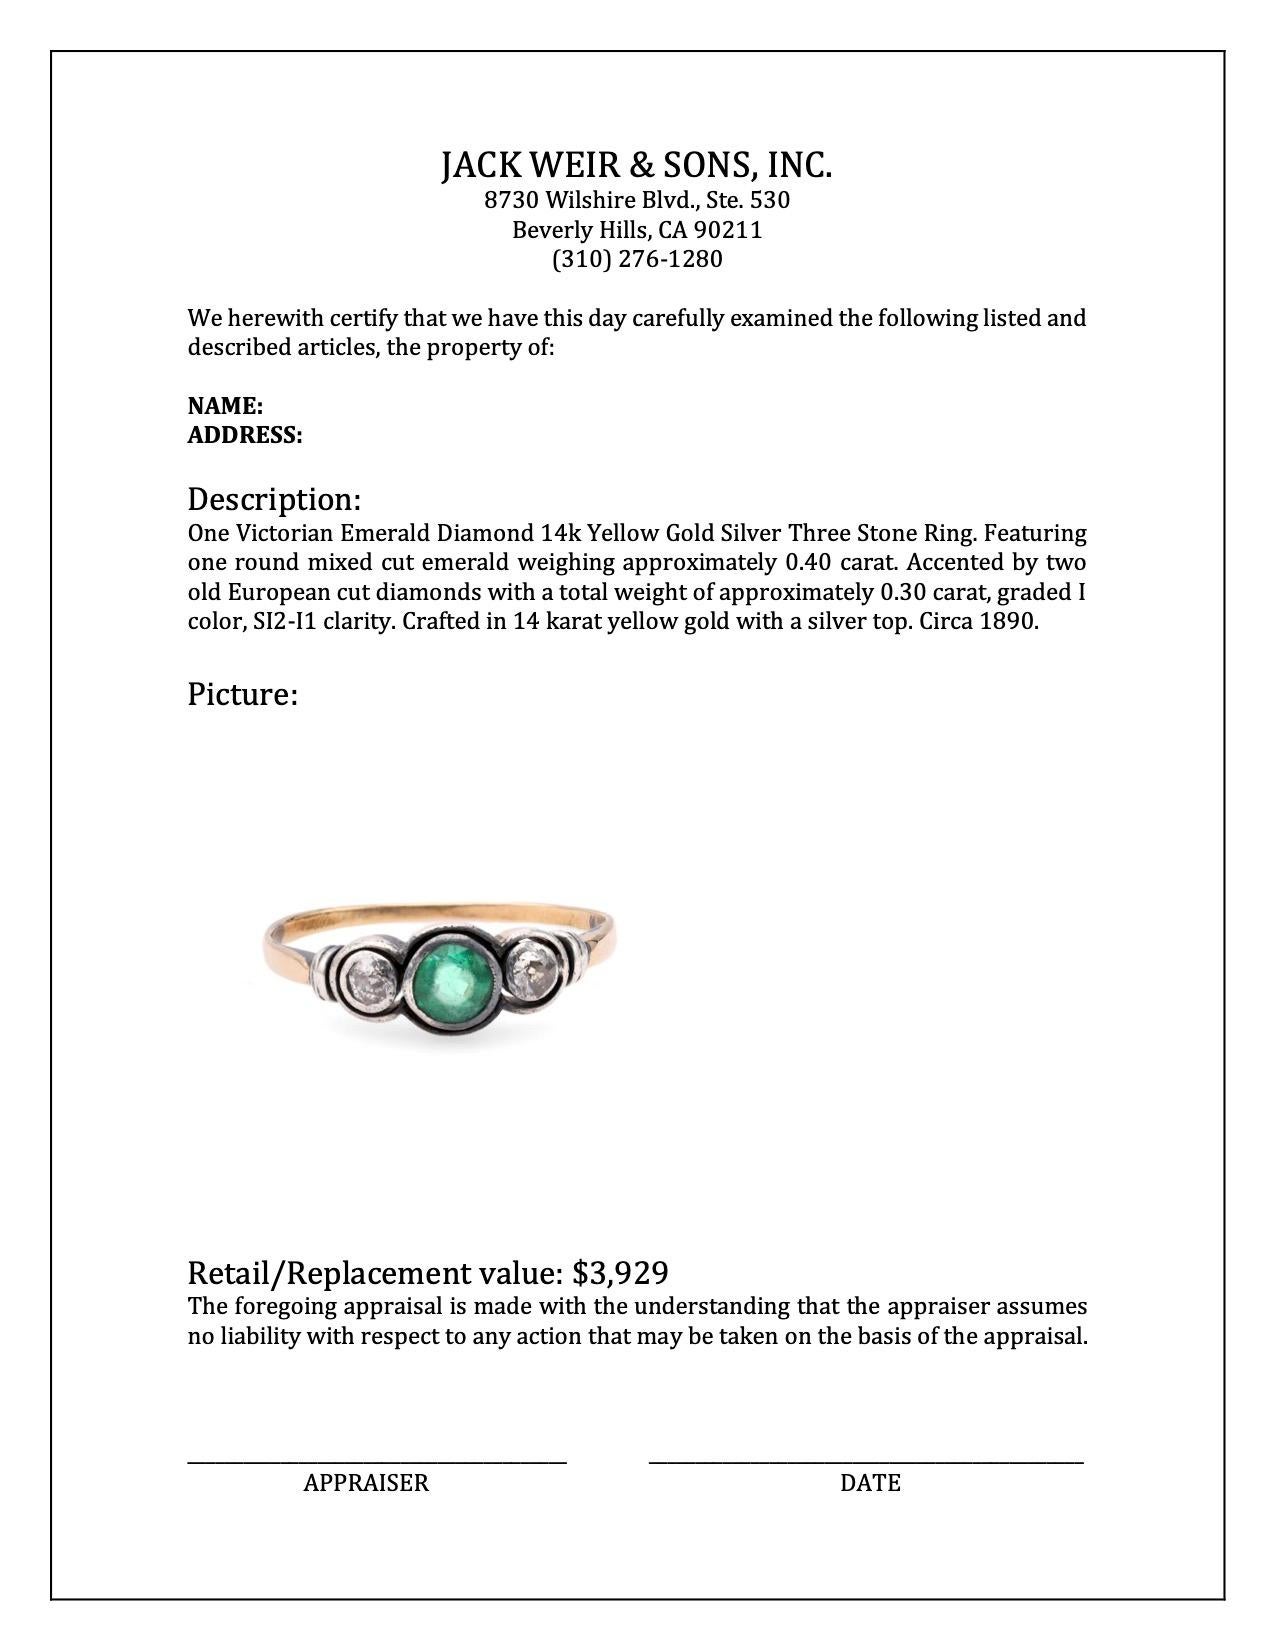 Women's or Men's Victorian Emerald Diamond 14k Yellow Gold Silver Three Stone Ring For Sale